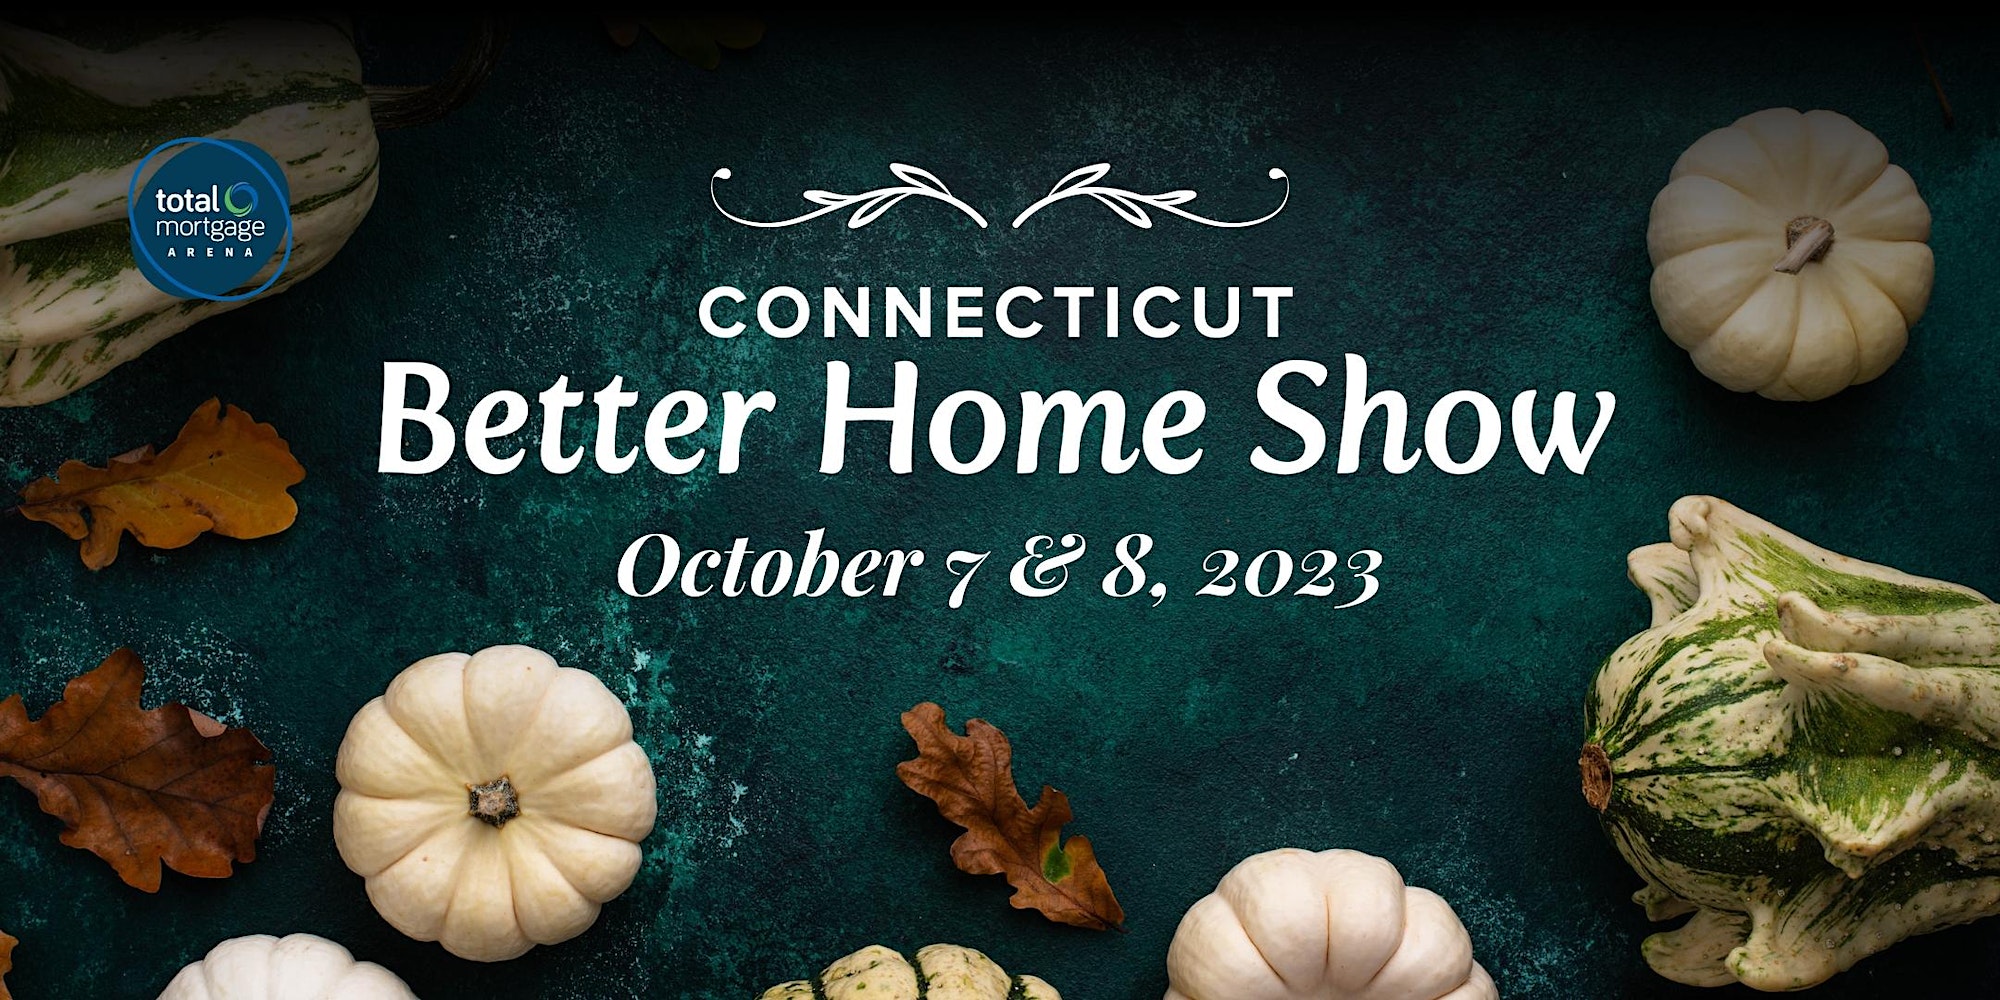 Connecticut Better Home Show